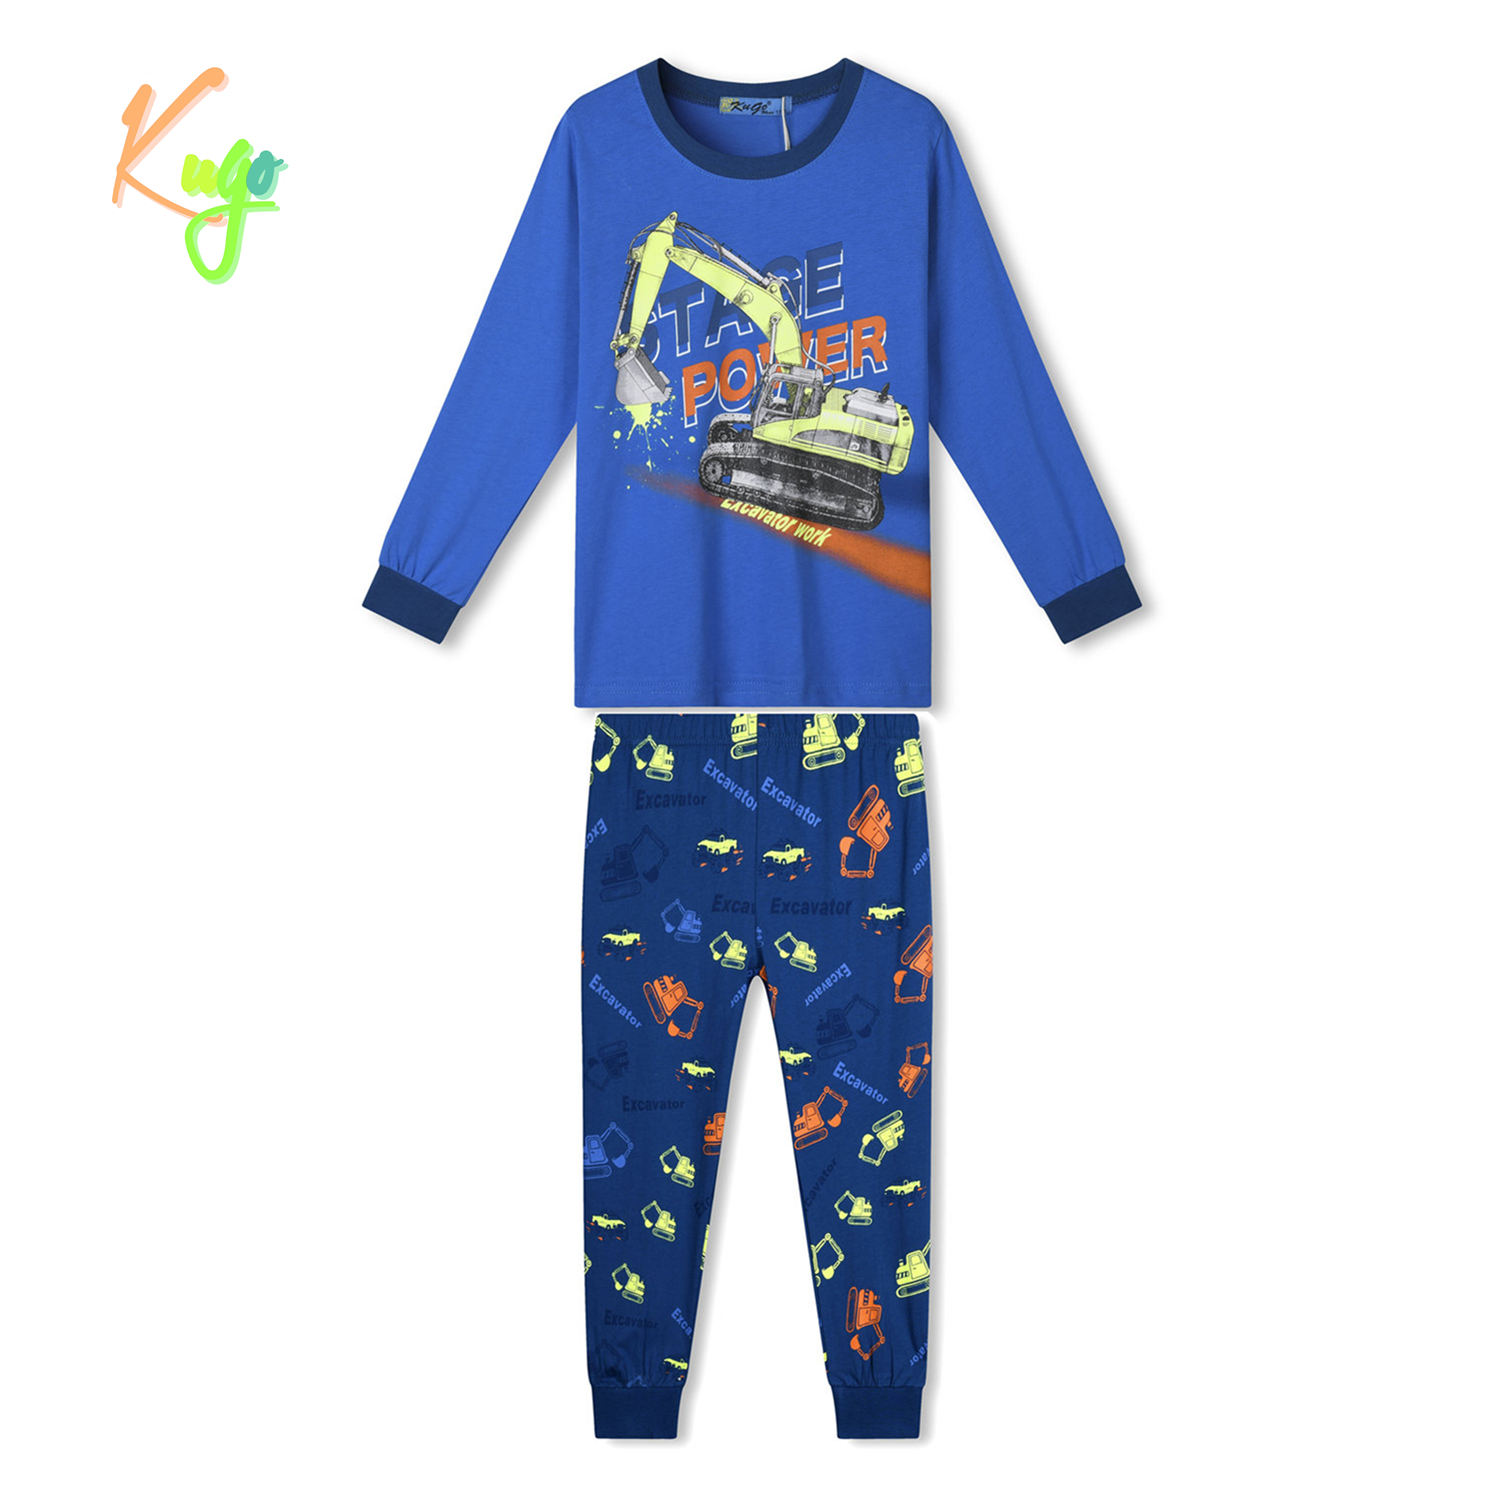 Chlapecké pyžamo - KUGO MP1370, petrol Barva: Petrol, Velikost: 116